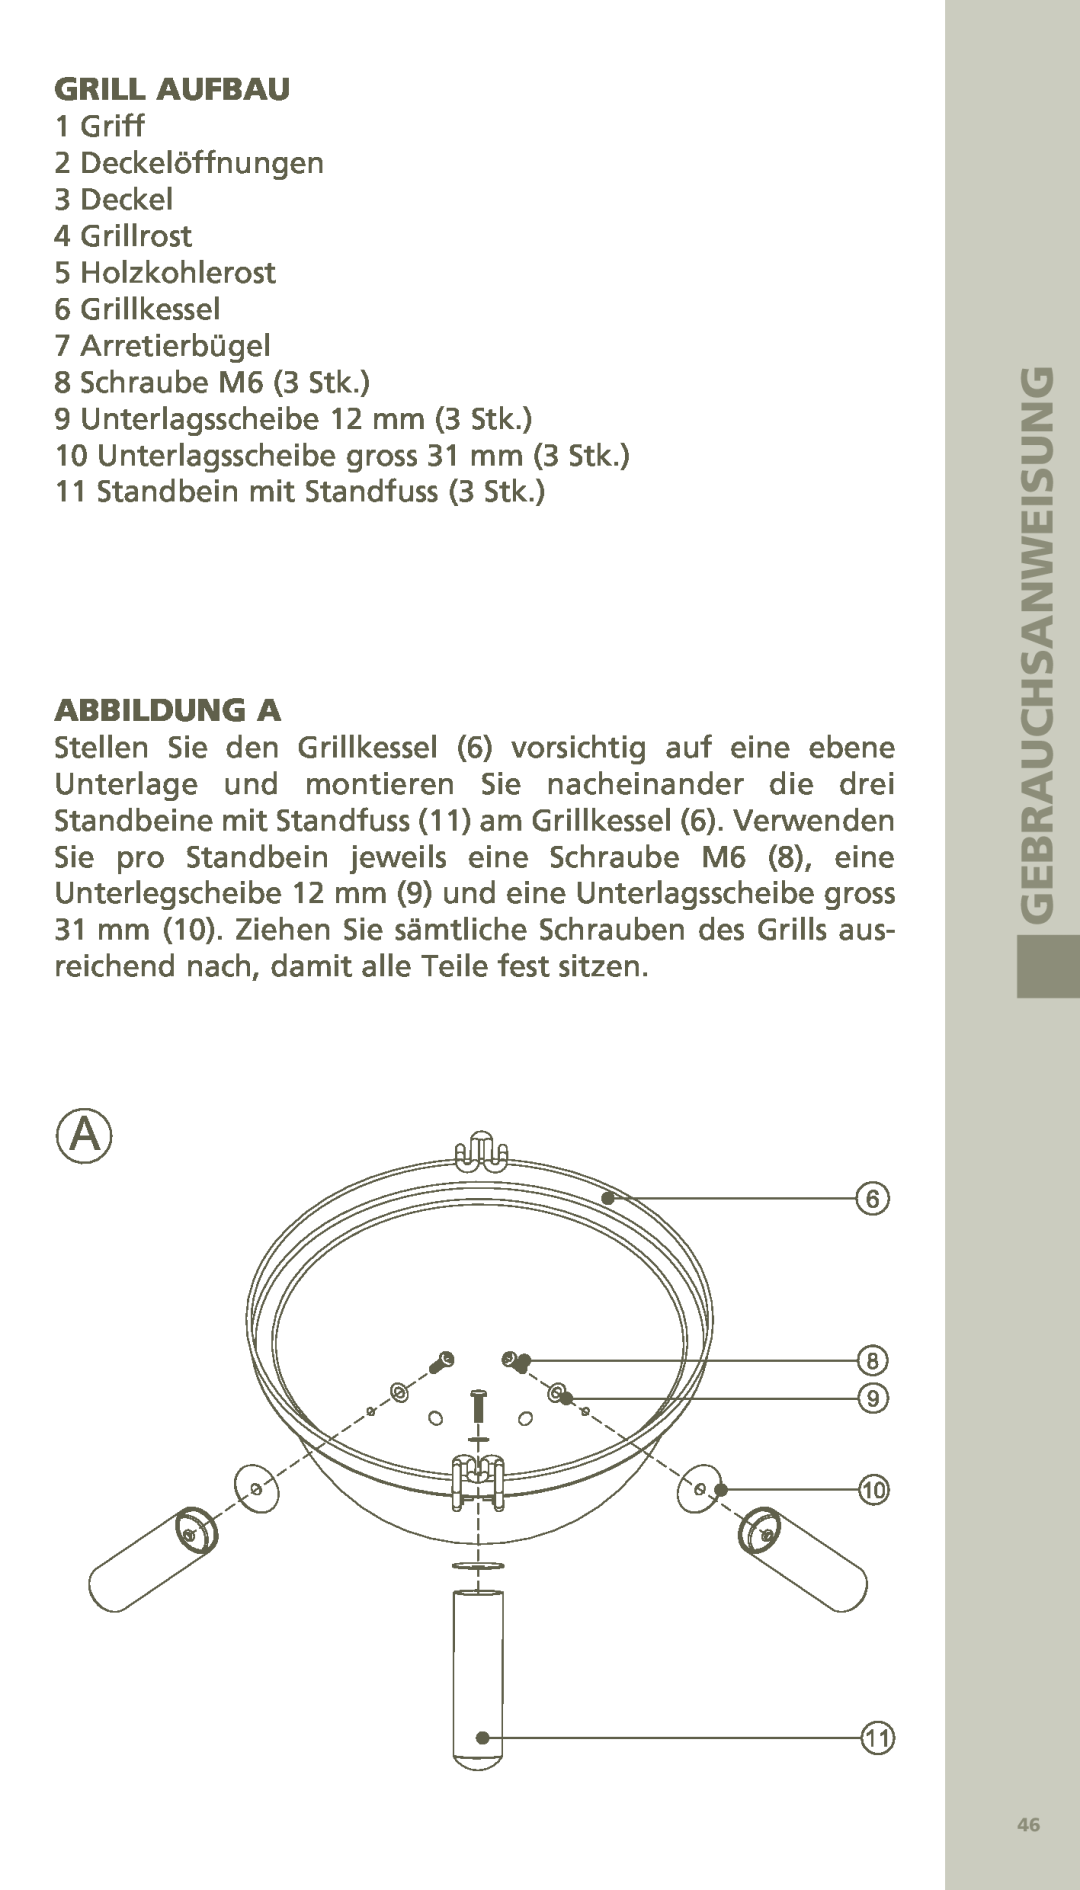 Bodum 11421 manual Gebrauchsanweisung, Grill Aufbau, Abbildung A 